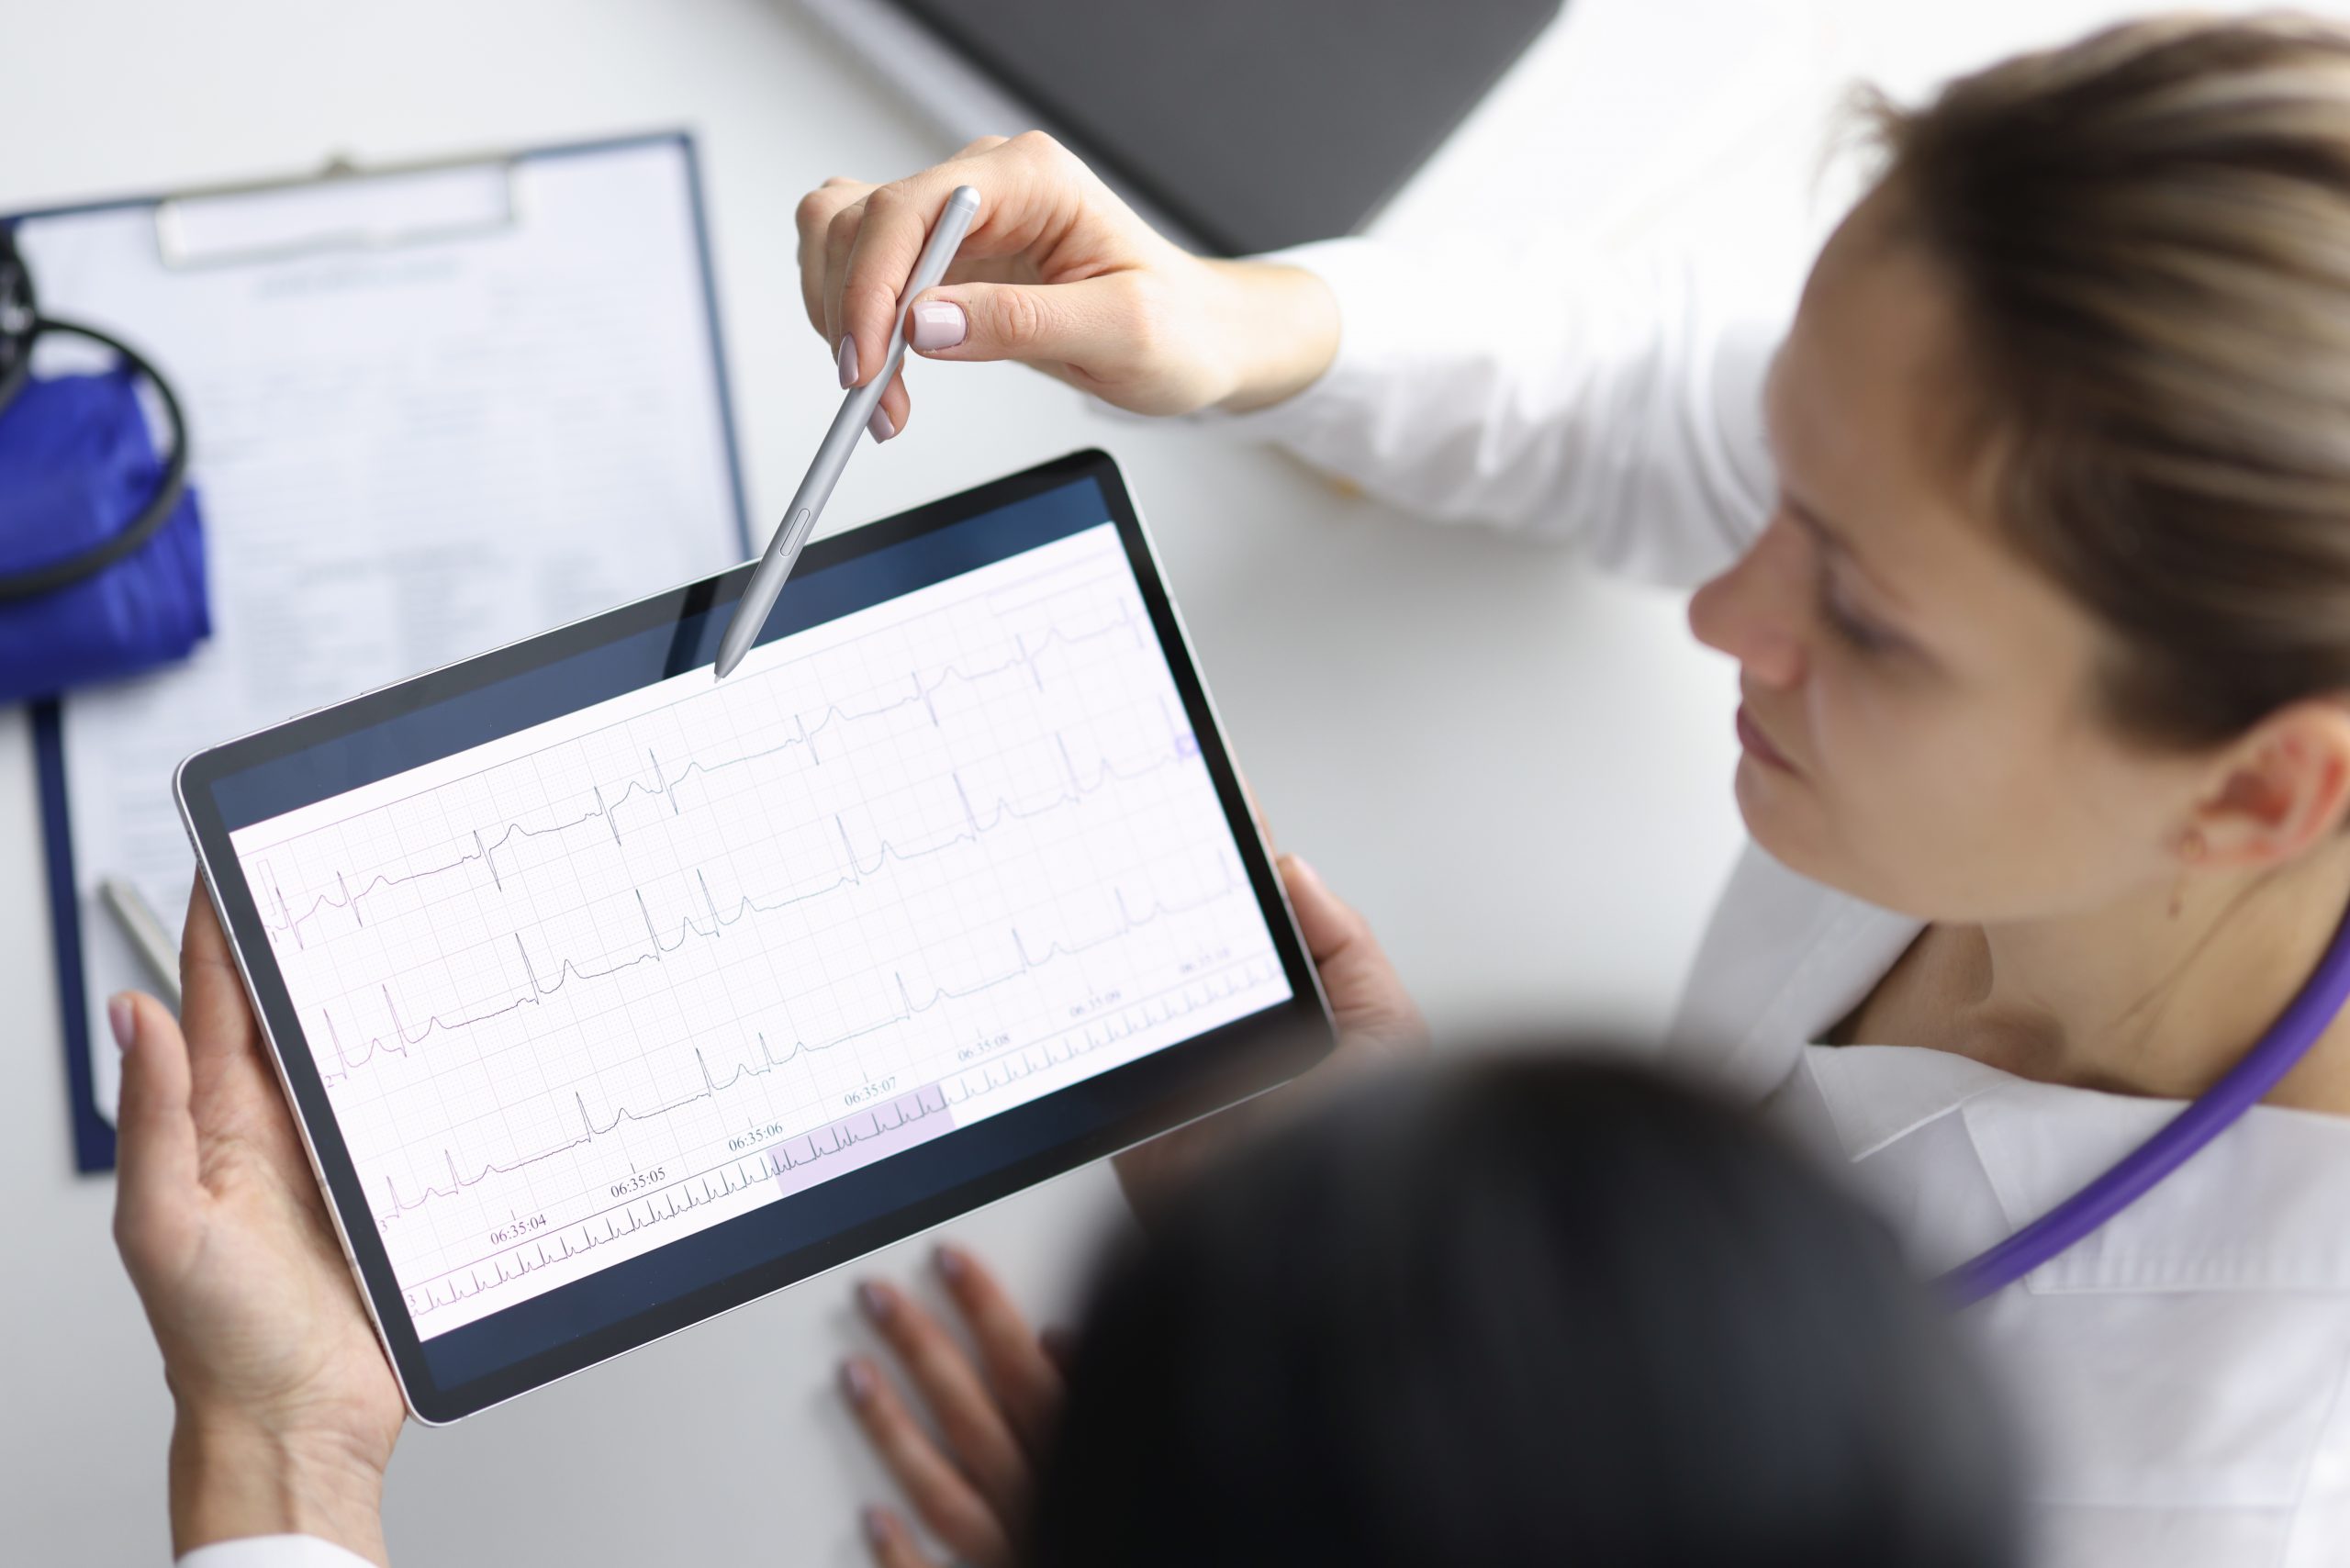 cardiologists discuss about cardiogram